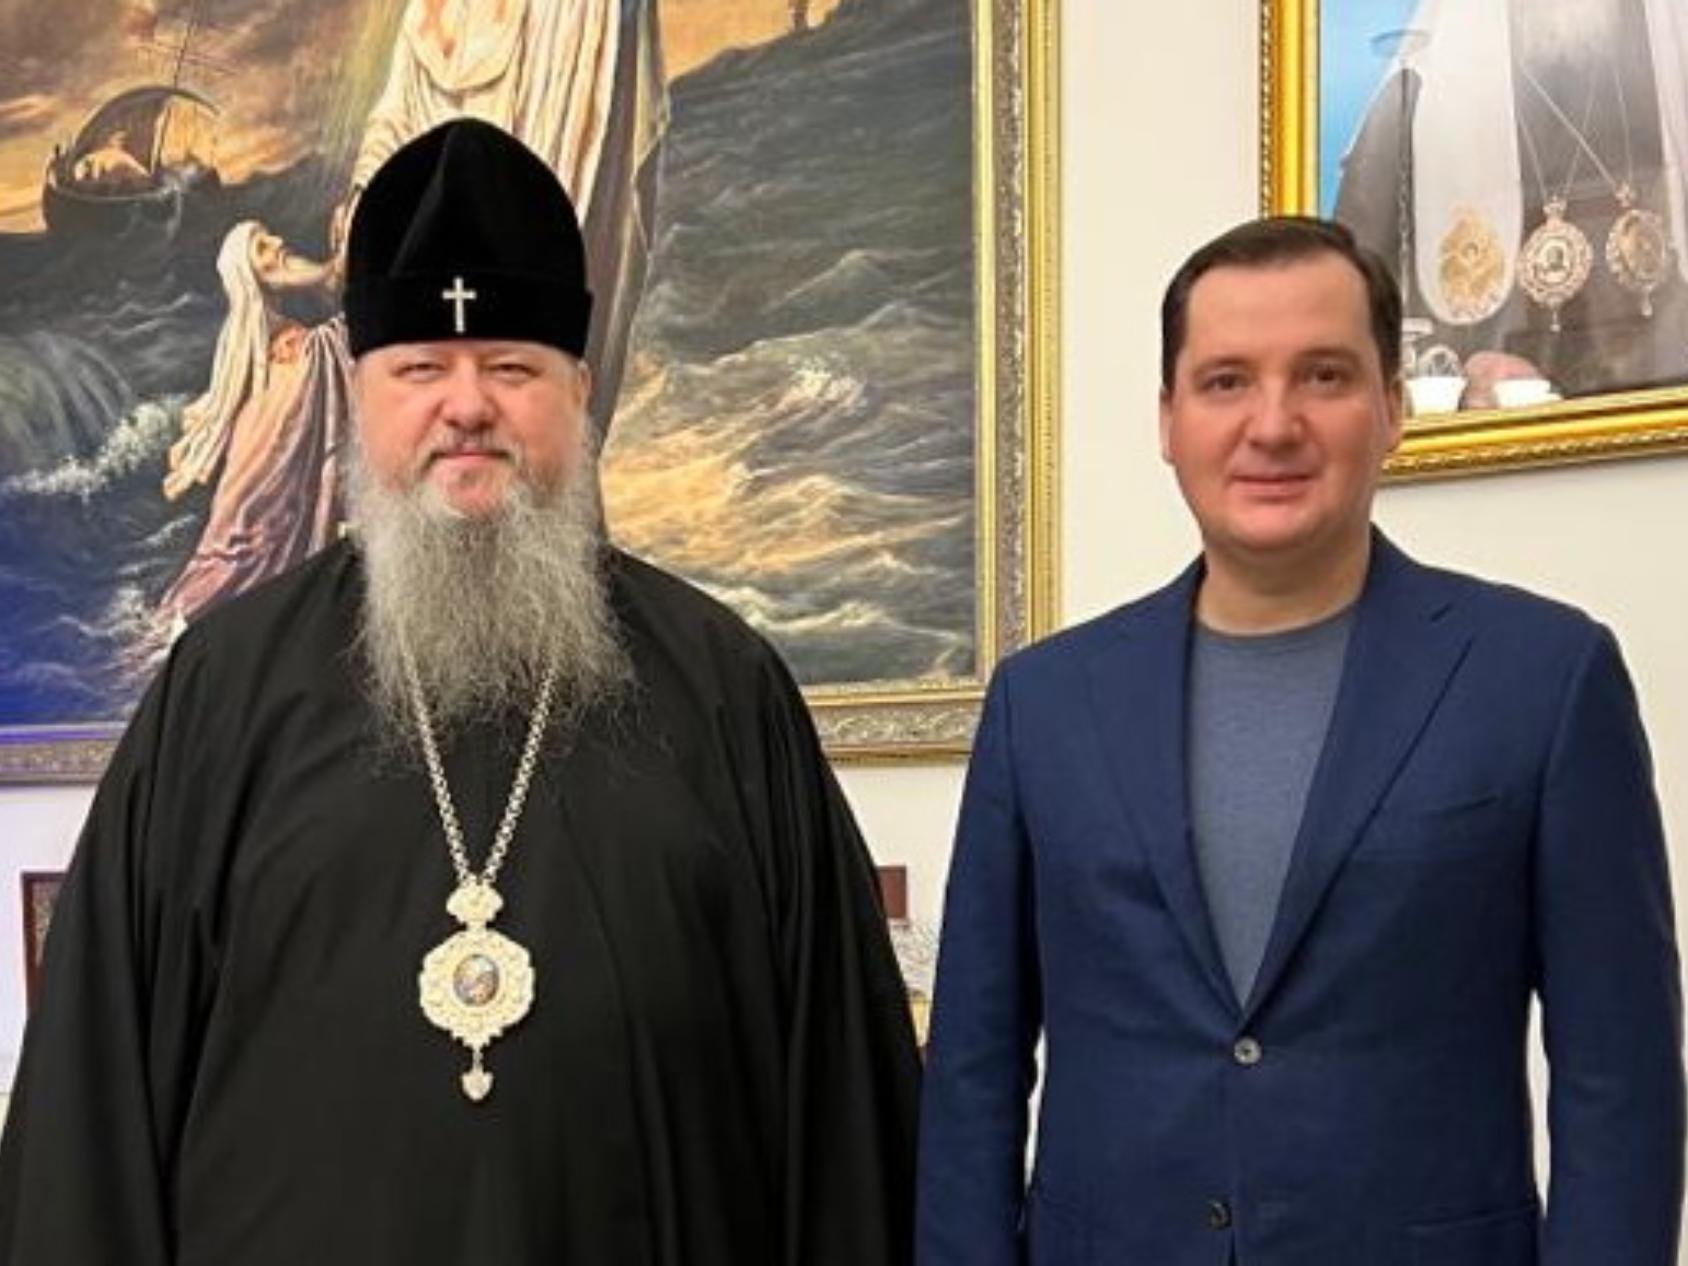 Alexander Tsybulsky met with Metropolitan Korniliy on Christmas Day